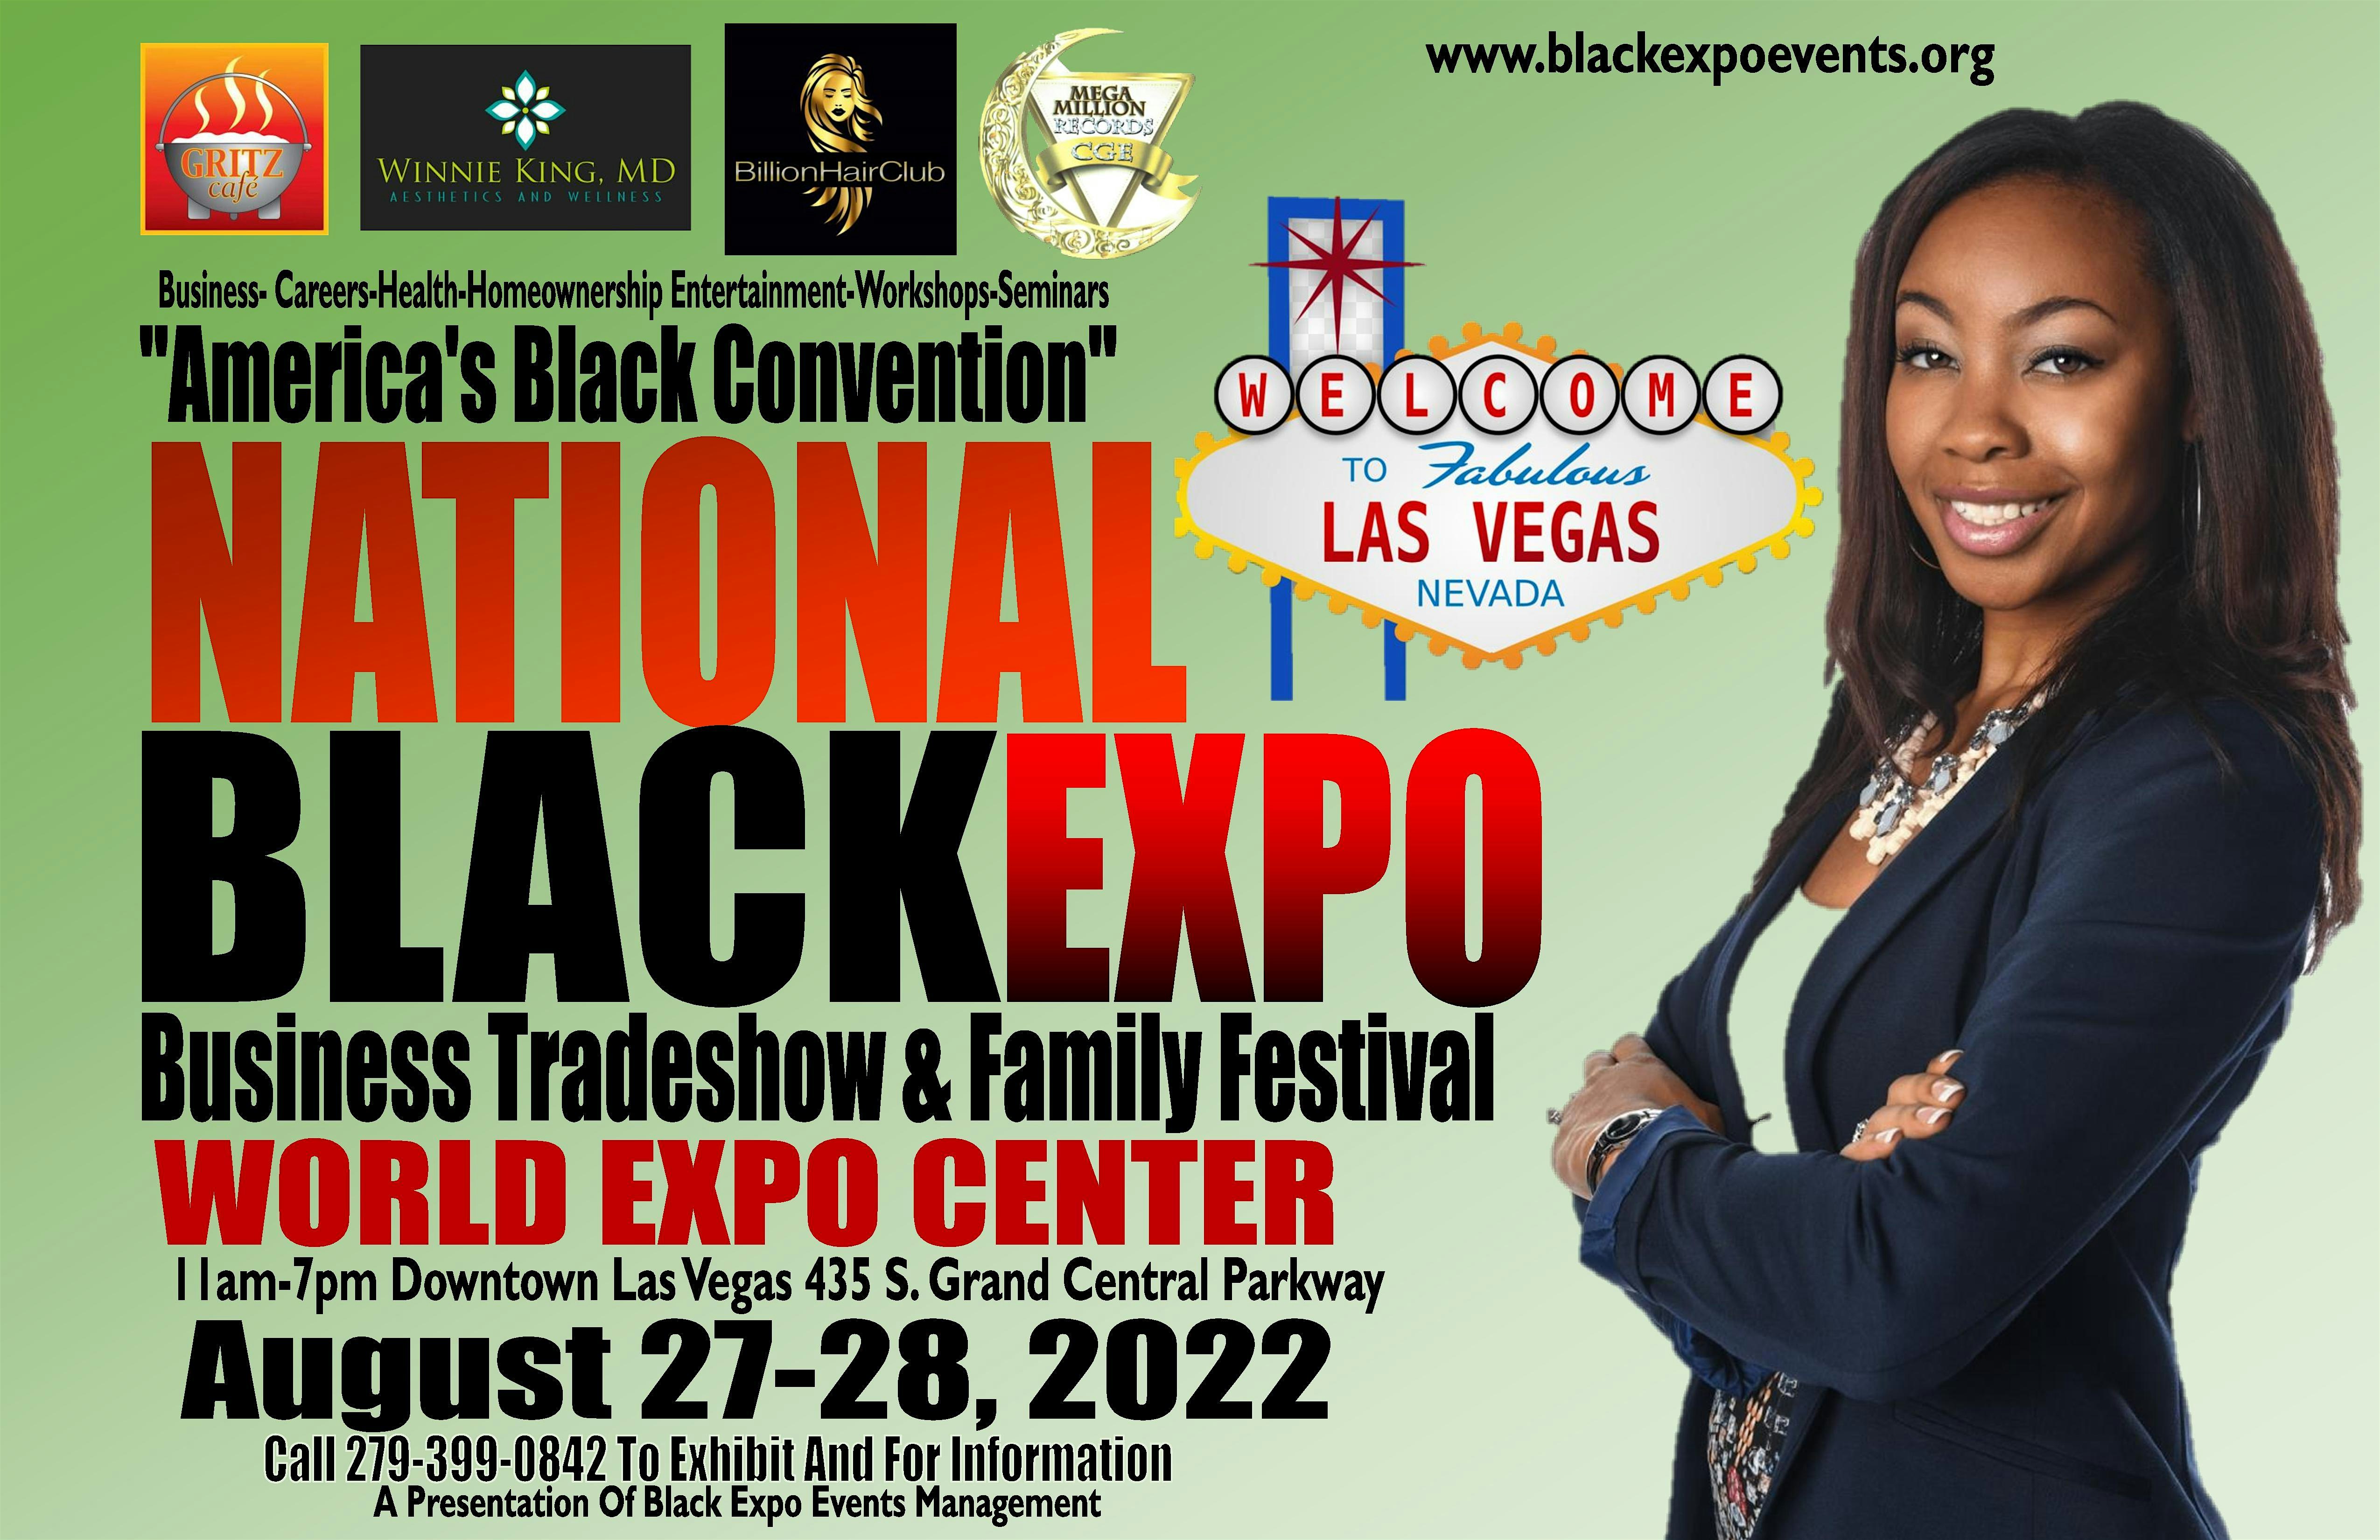 BLACK EXPO NATIONAL BUSINESS TRADESHOW & FAMILY FESTIVAL